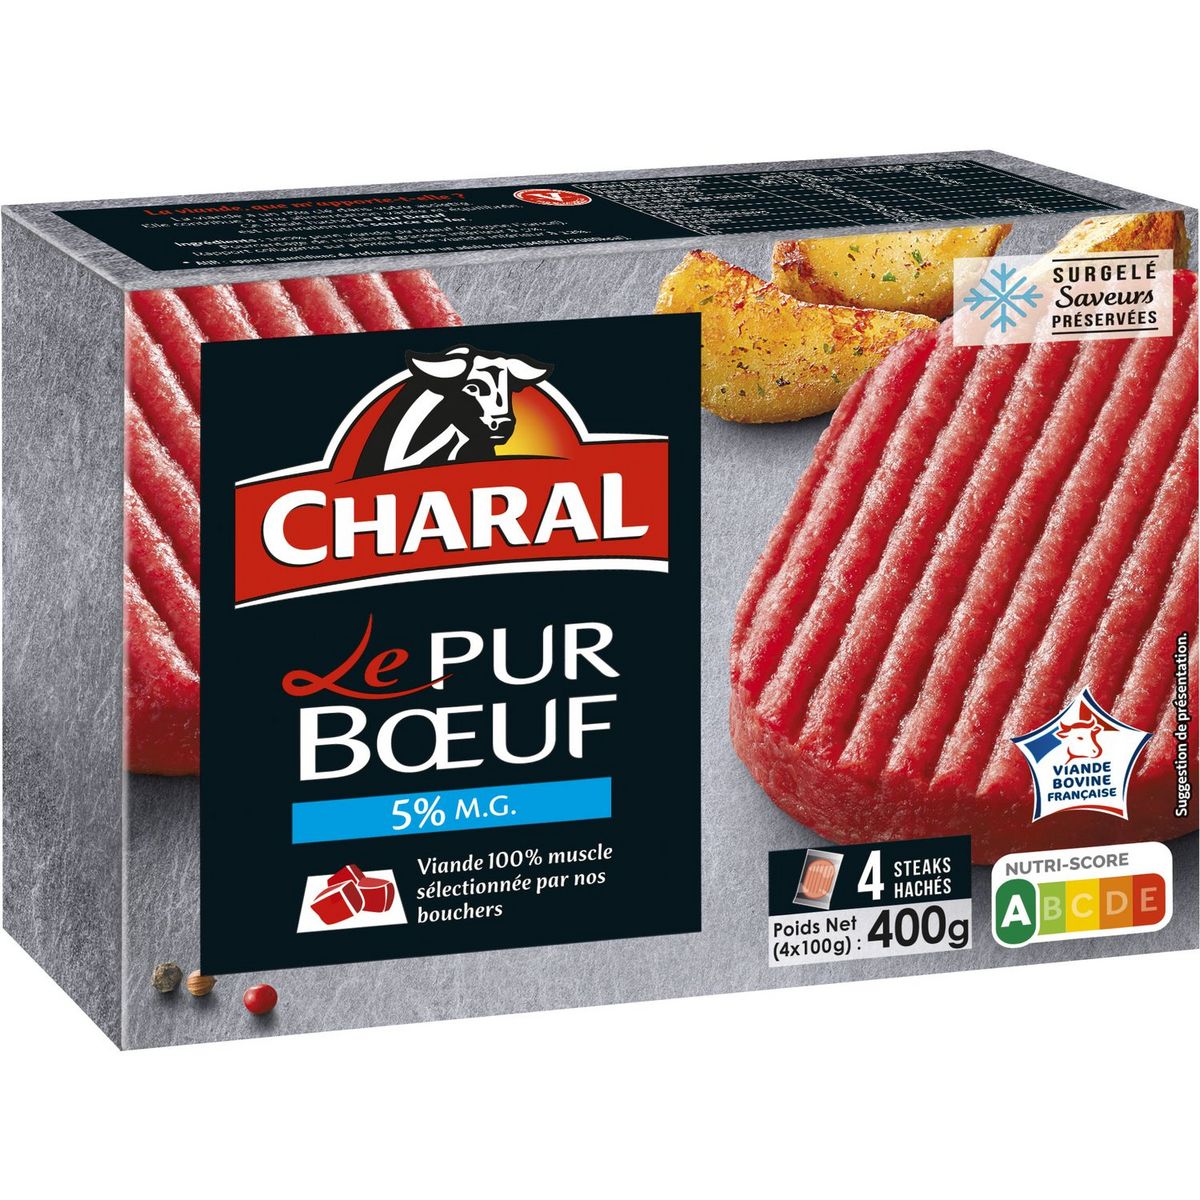 CHARAL Steaks hachés pur bœuf 5% MG 4 steaks 400g